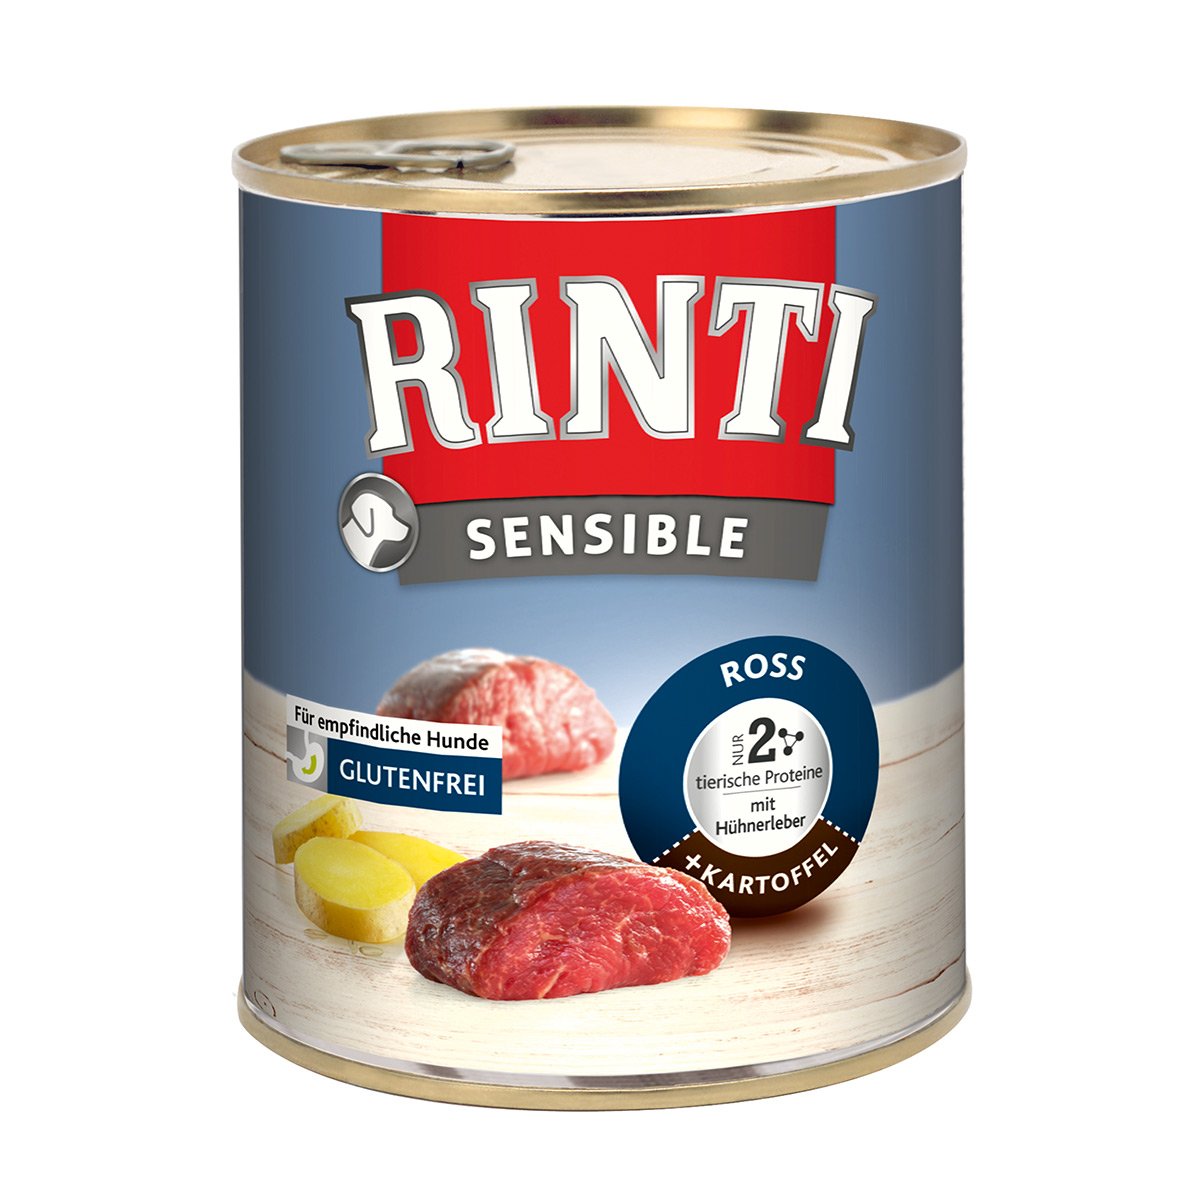 Rinti Sensible Ross & Hühnerleber & Kartoffel 6x800g